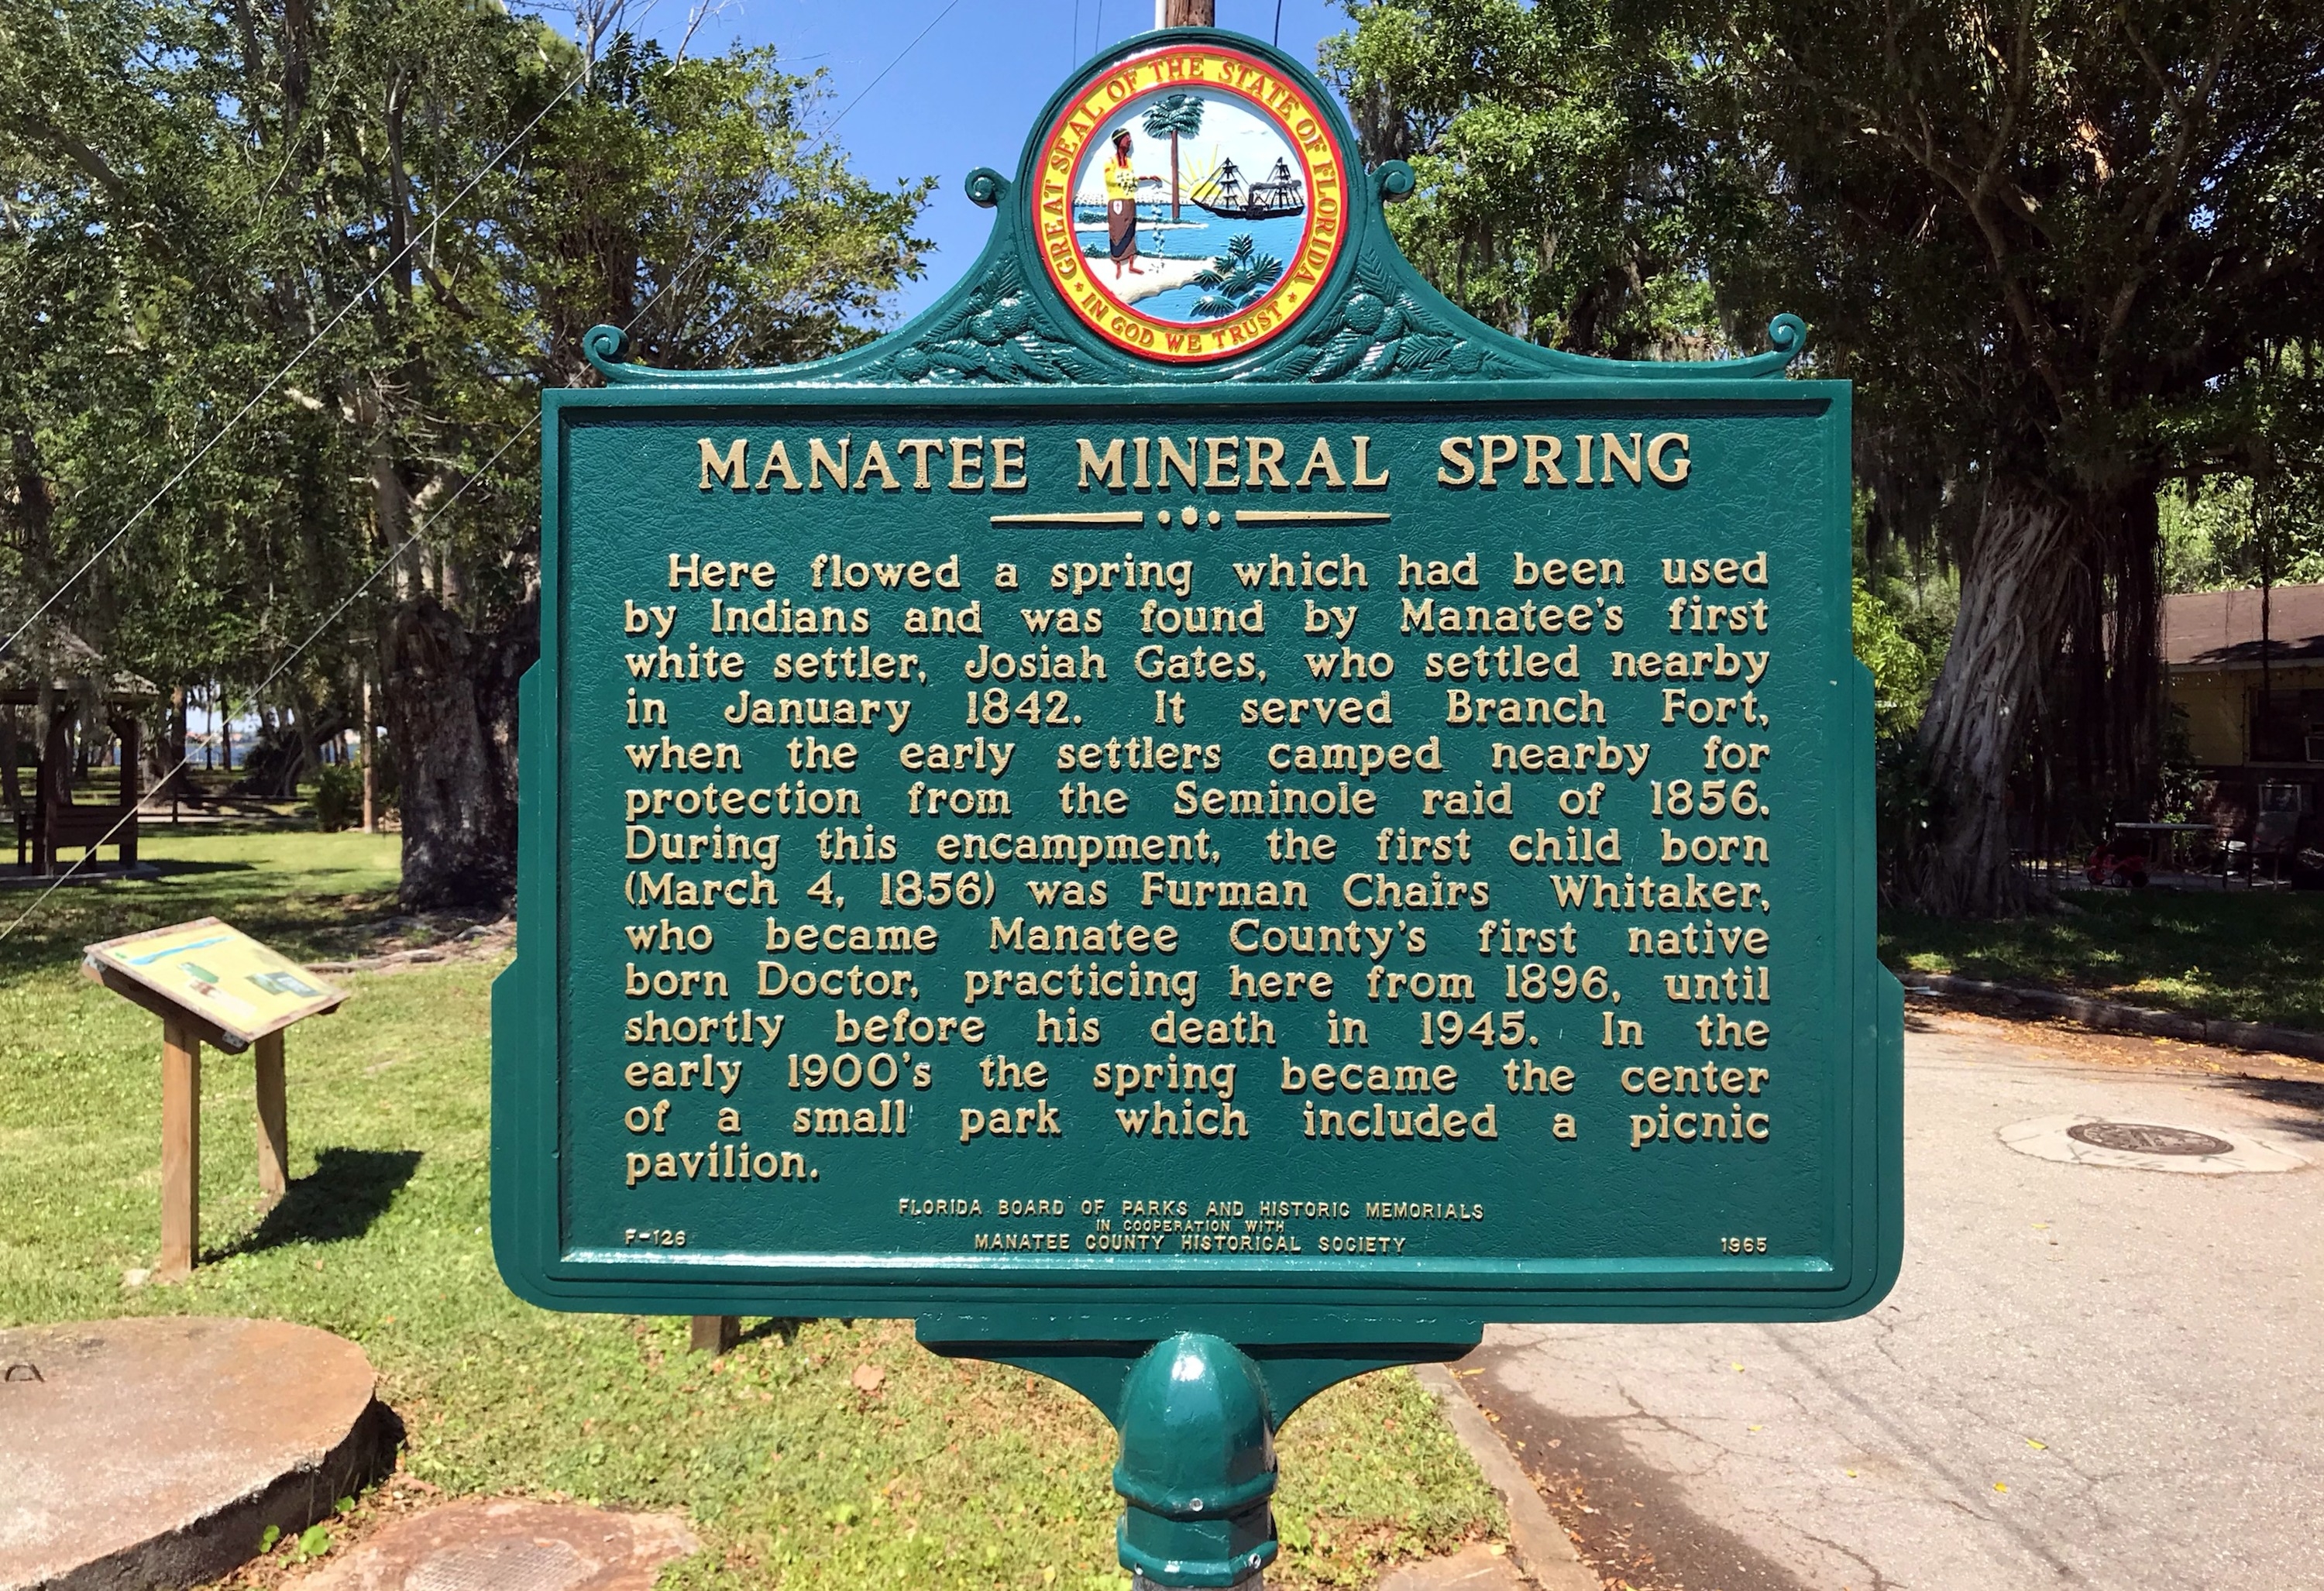 Manatee Mineral Spring Marker after restoration